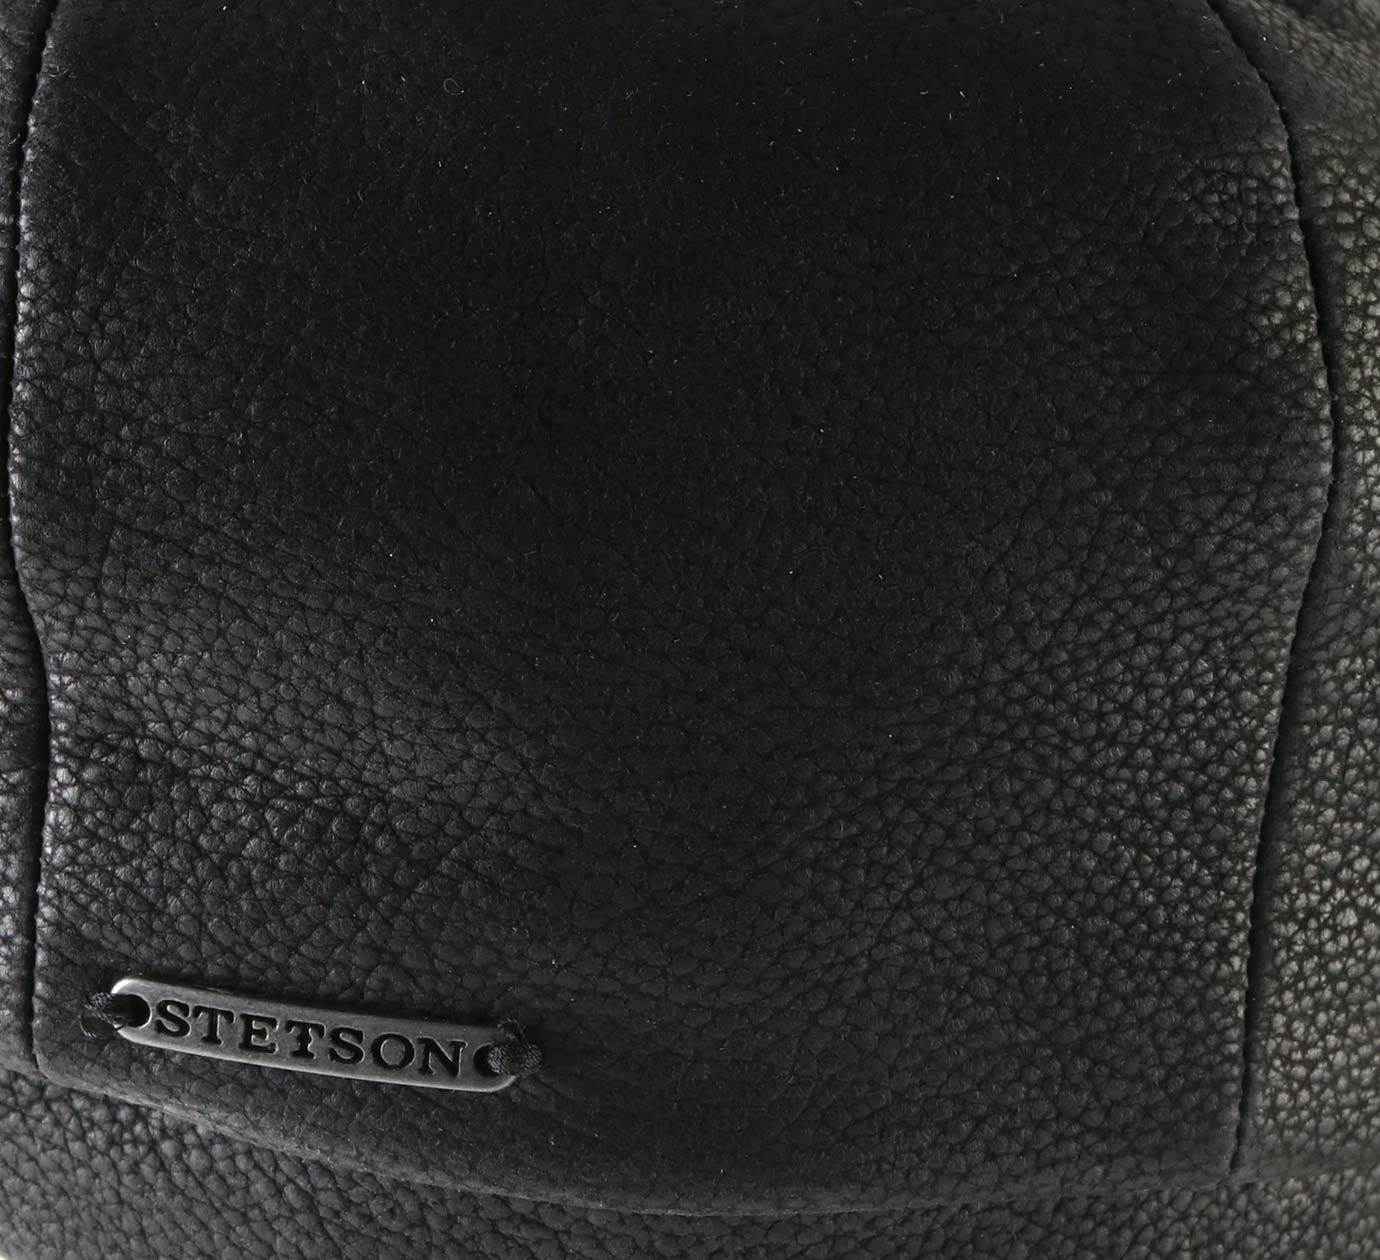 Stetson Men's Hatteras Chevrette Leather Flat Cap | eBay